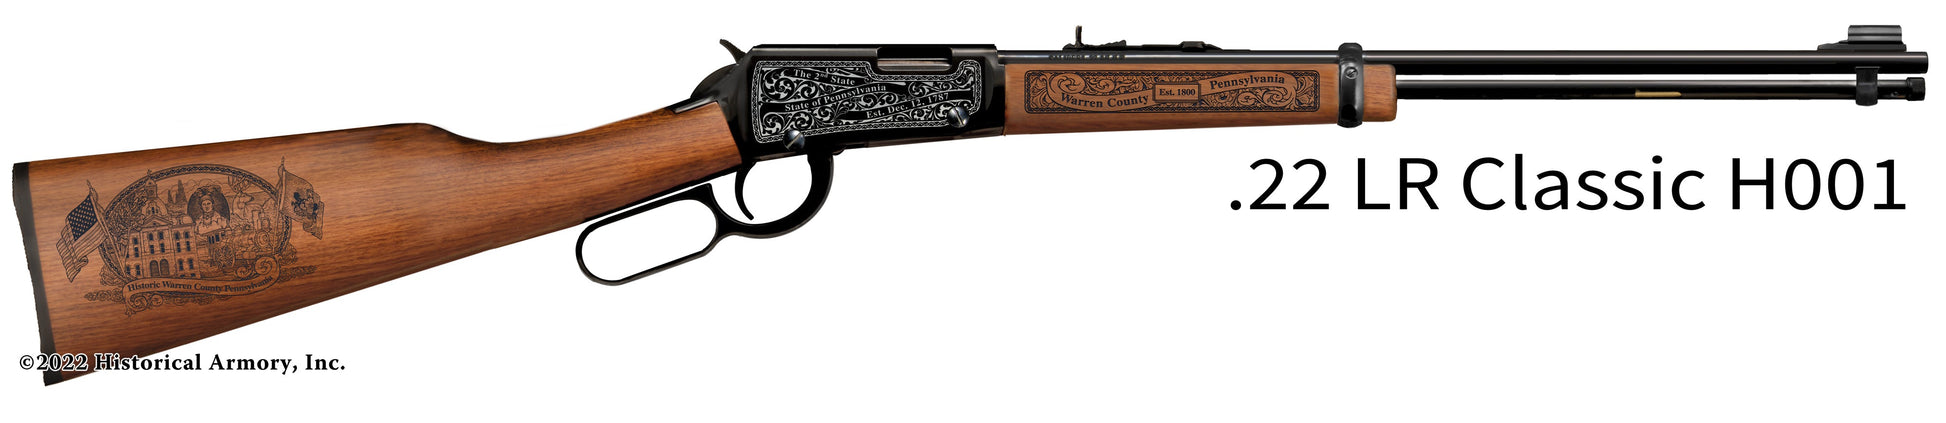 Warren County Pennsylvania Engraved Henry H001 Rifle